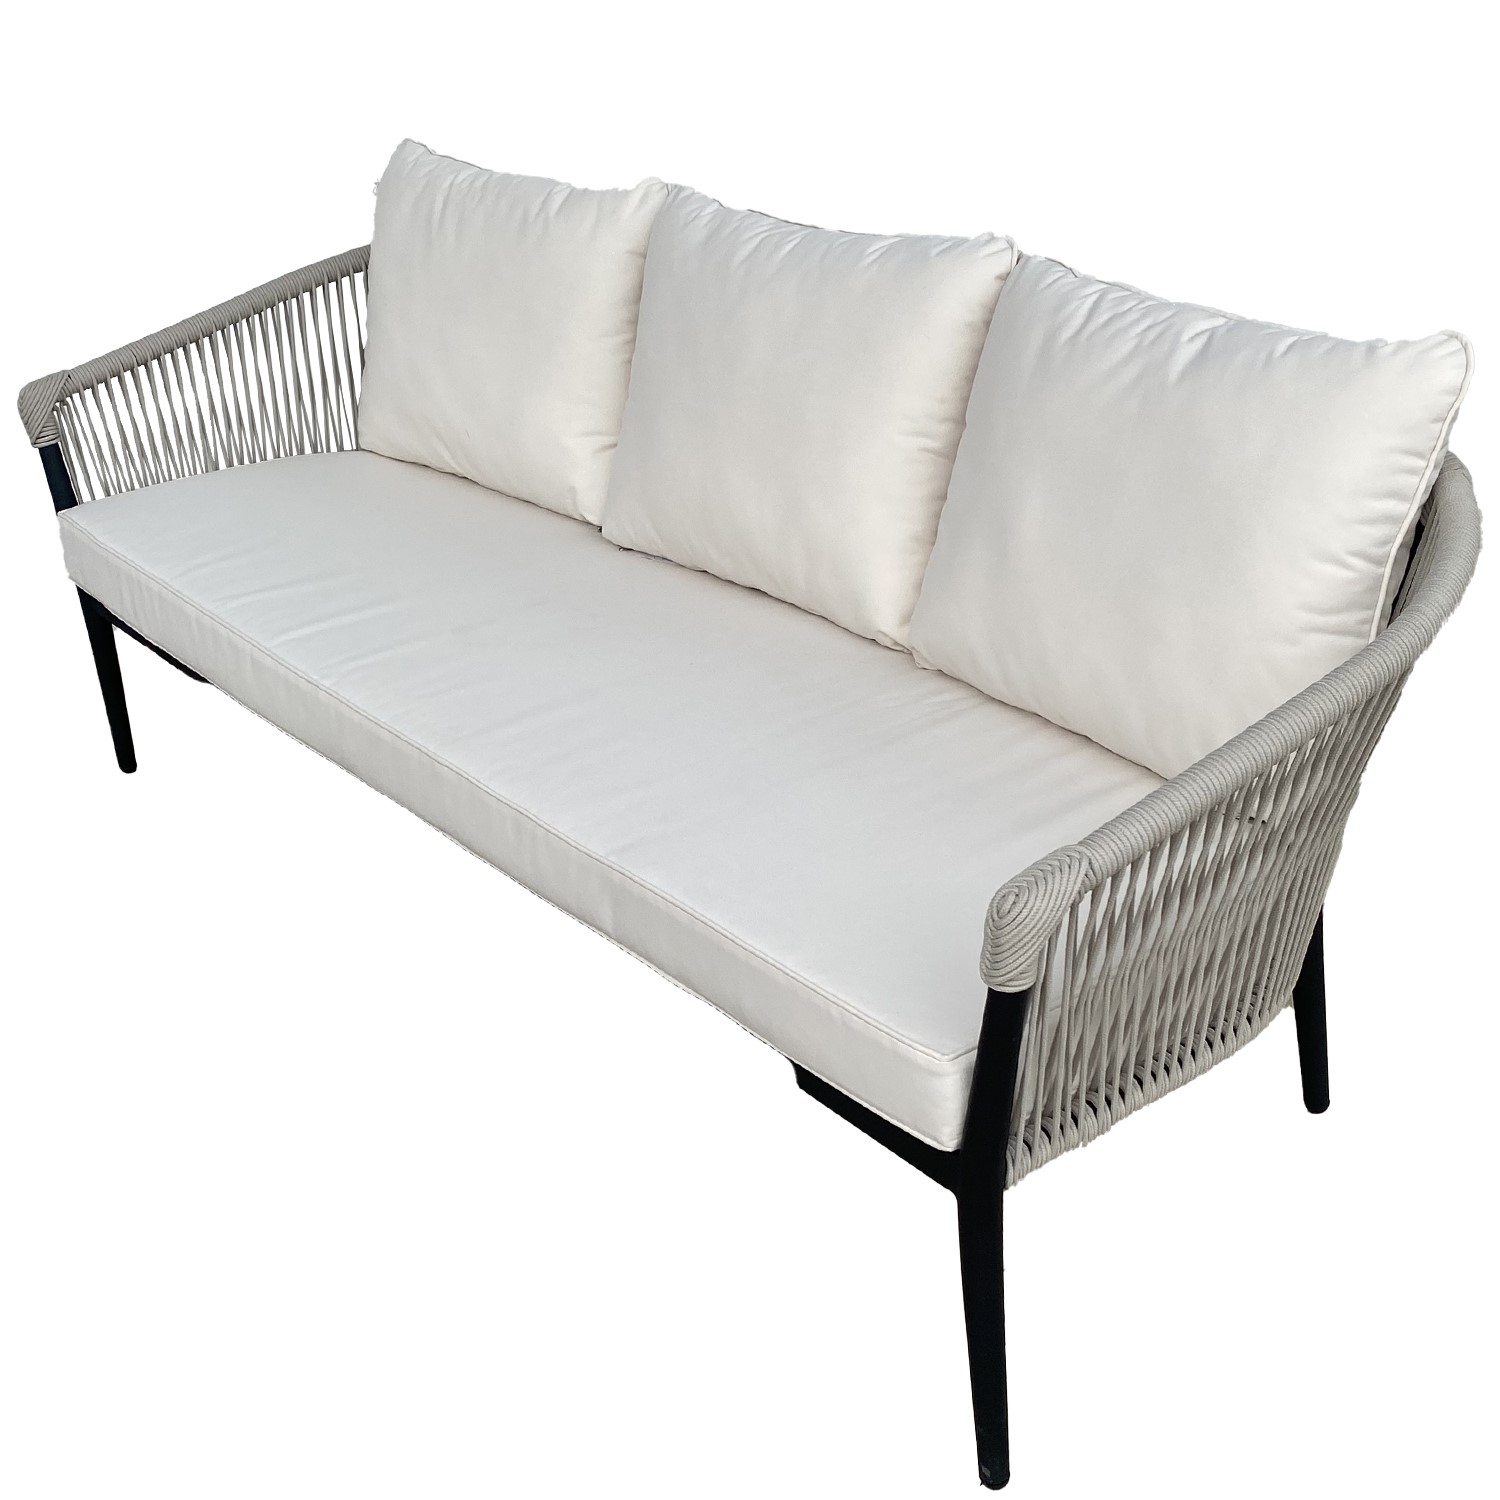 FTR179 Garden Sofa Set Features